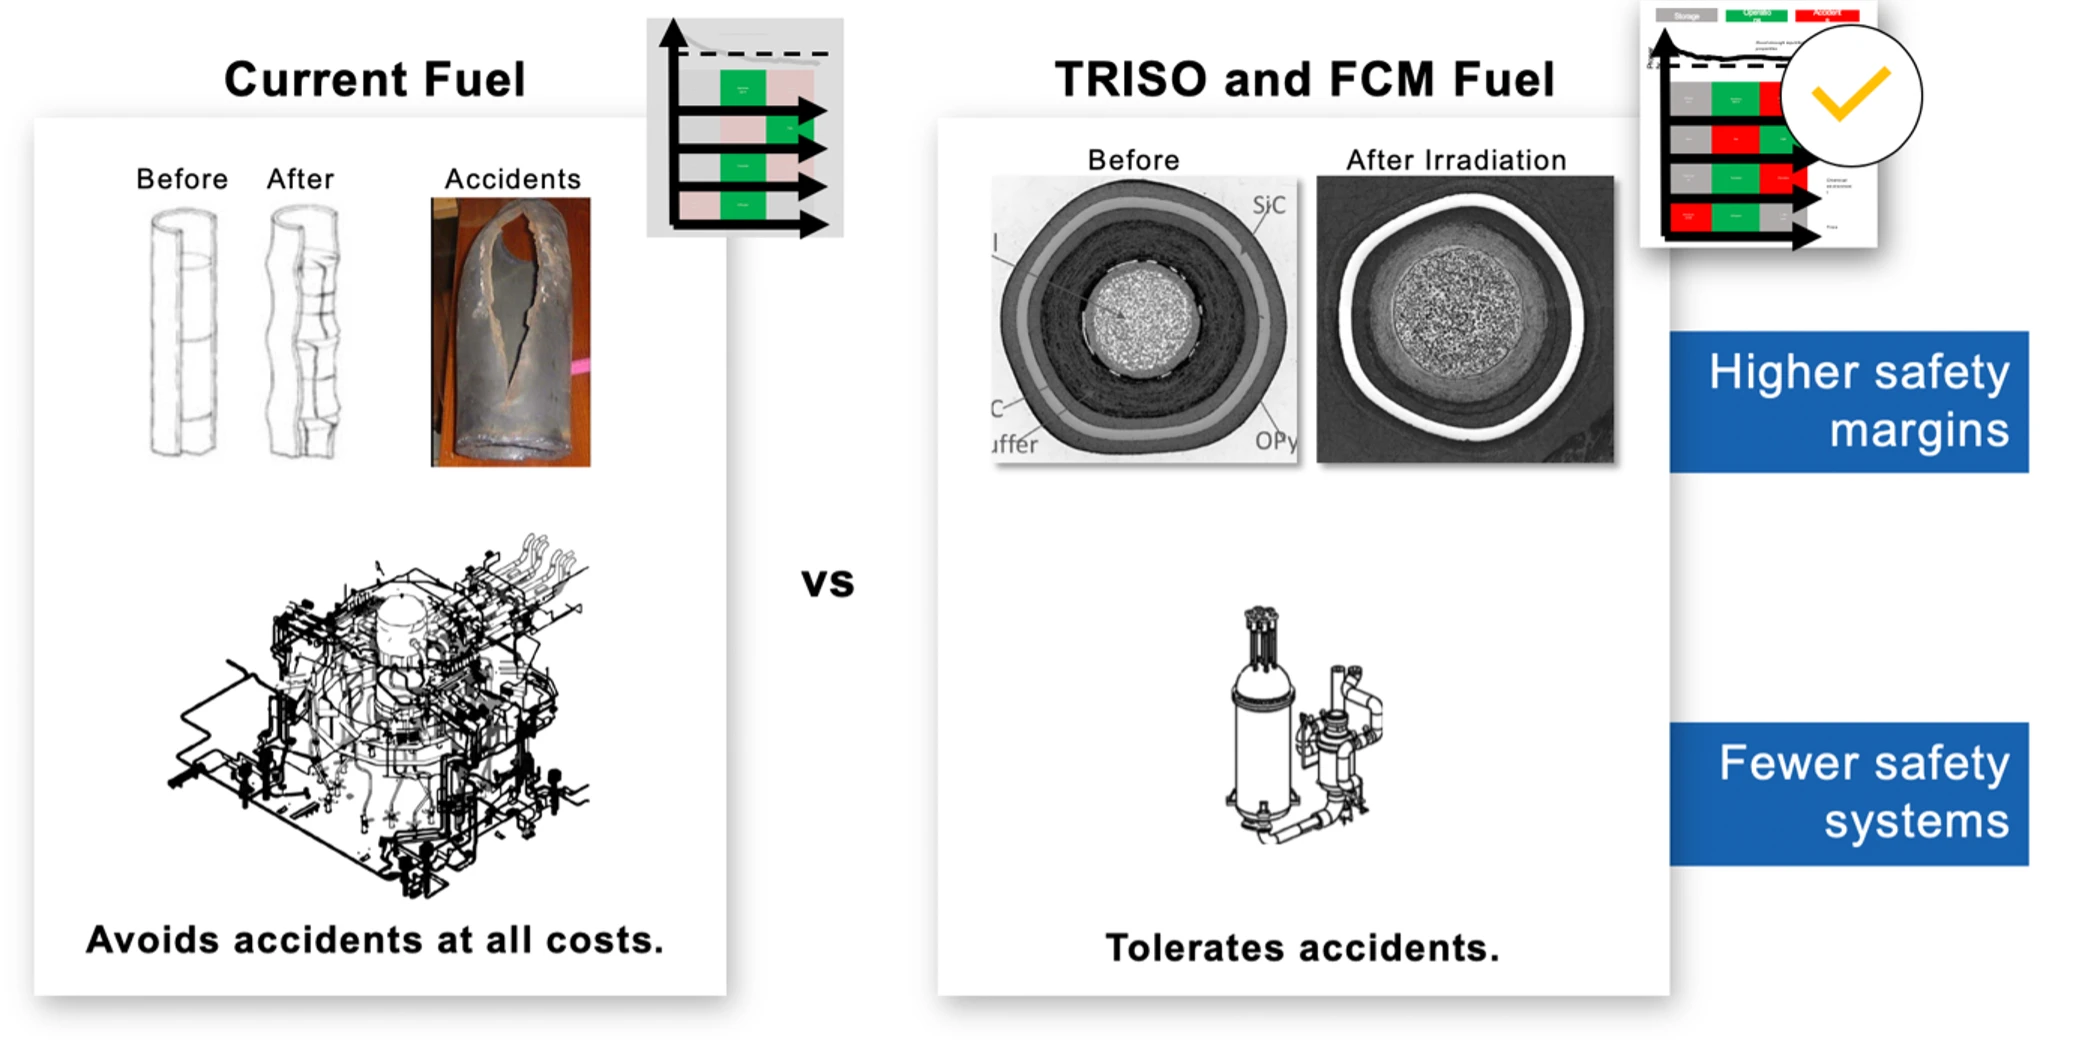 Normal fuel versus TRISO fuel